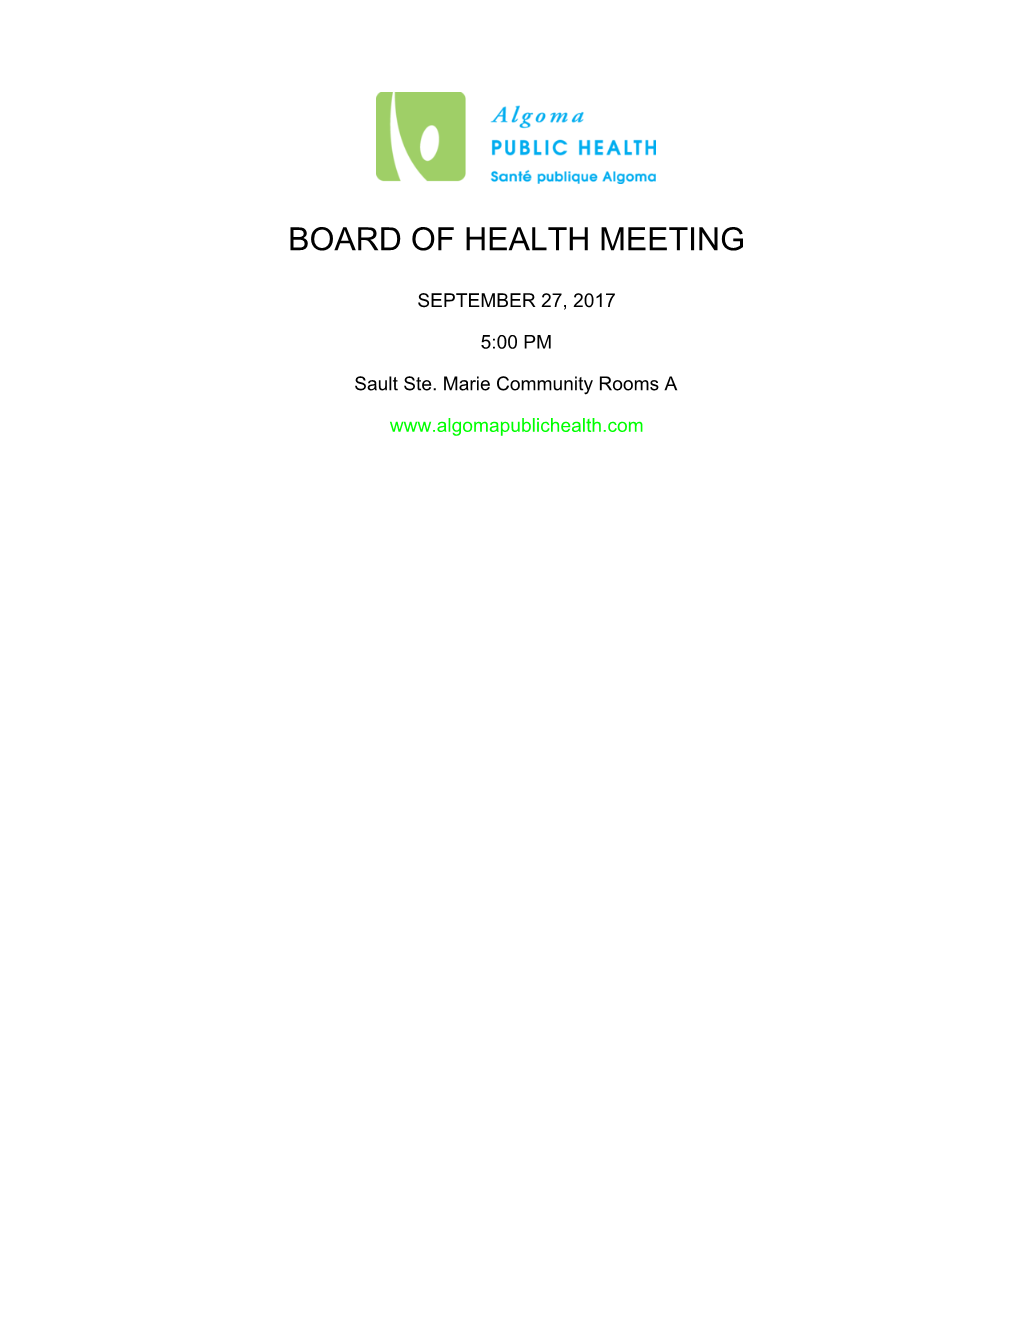 Board of Health Meeting